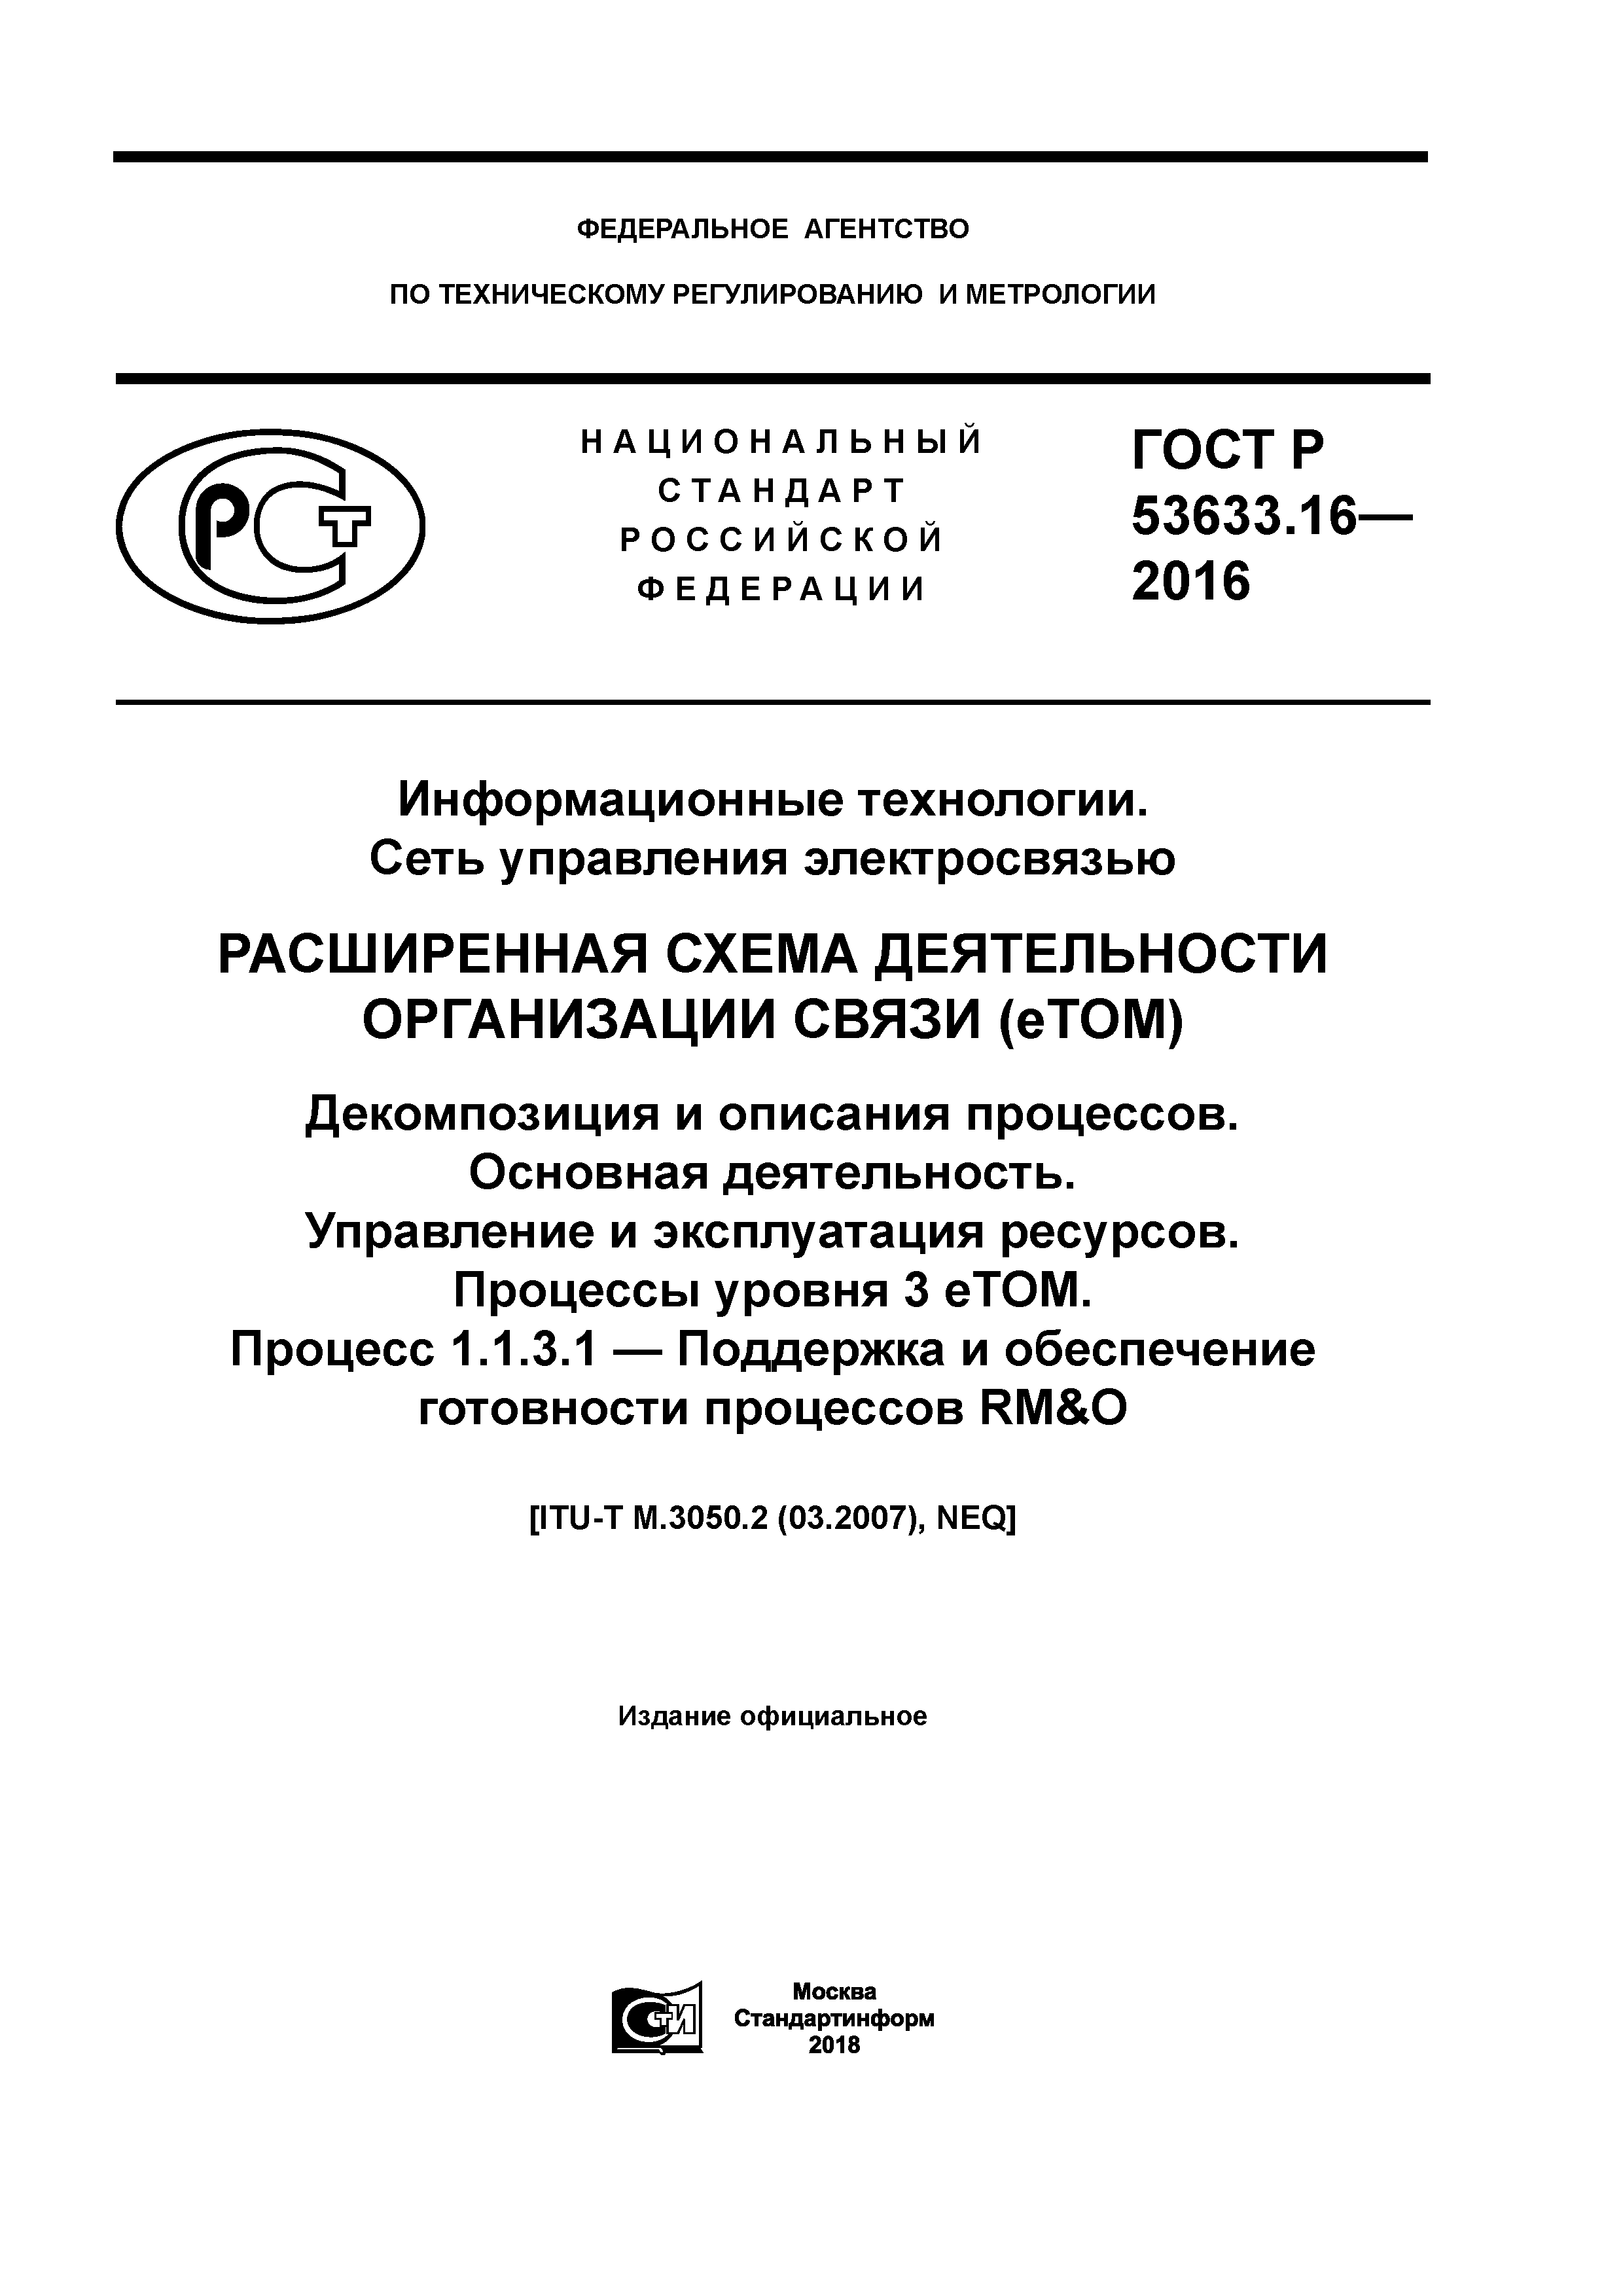 ГОСТ Р 53633.16-2016